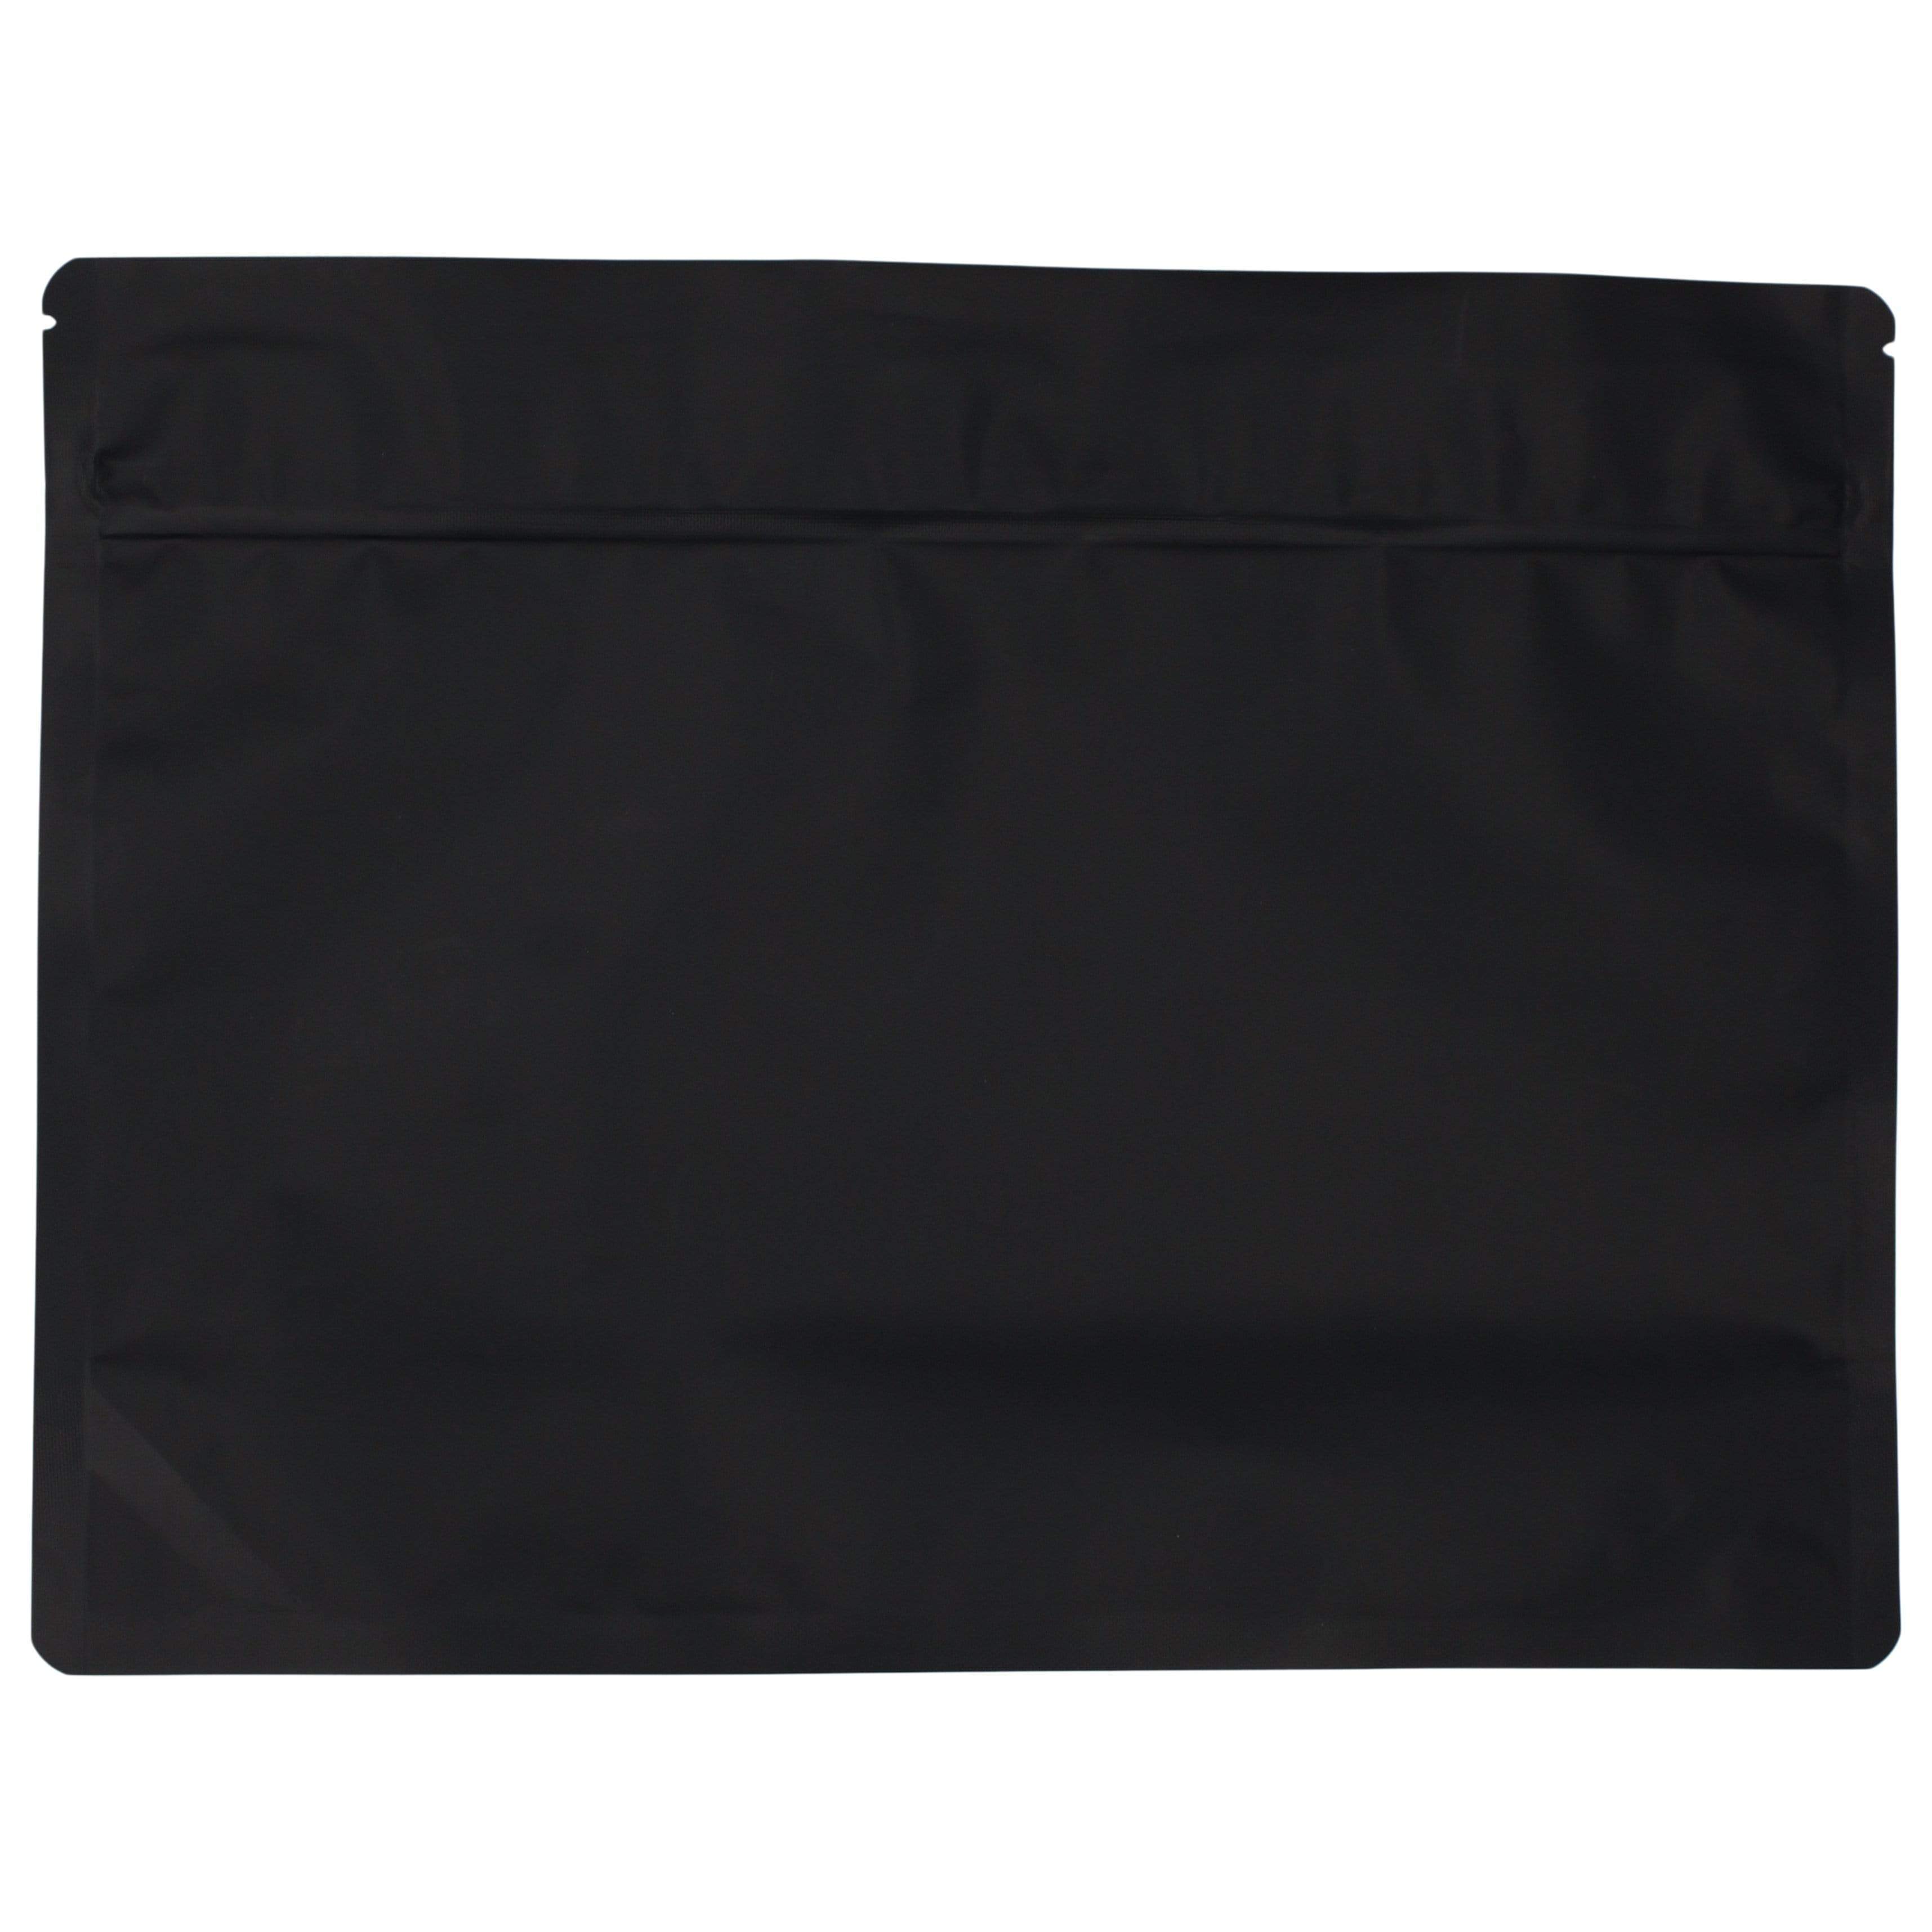 Matte Black Bag King Large Child-Resistant Opaque Exit Bag (1/2 lb) 9.0